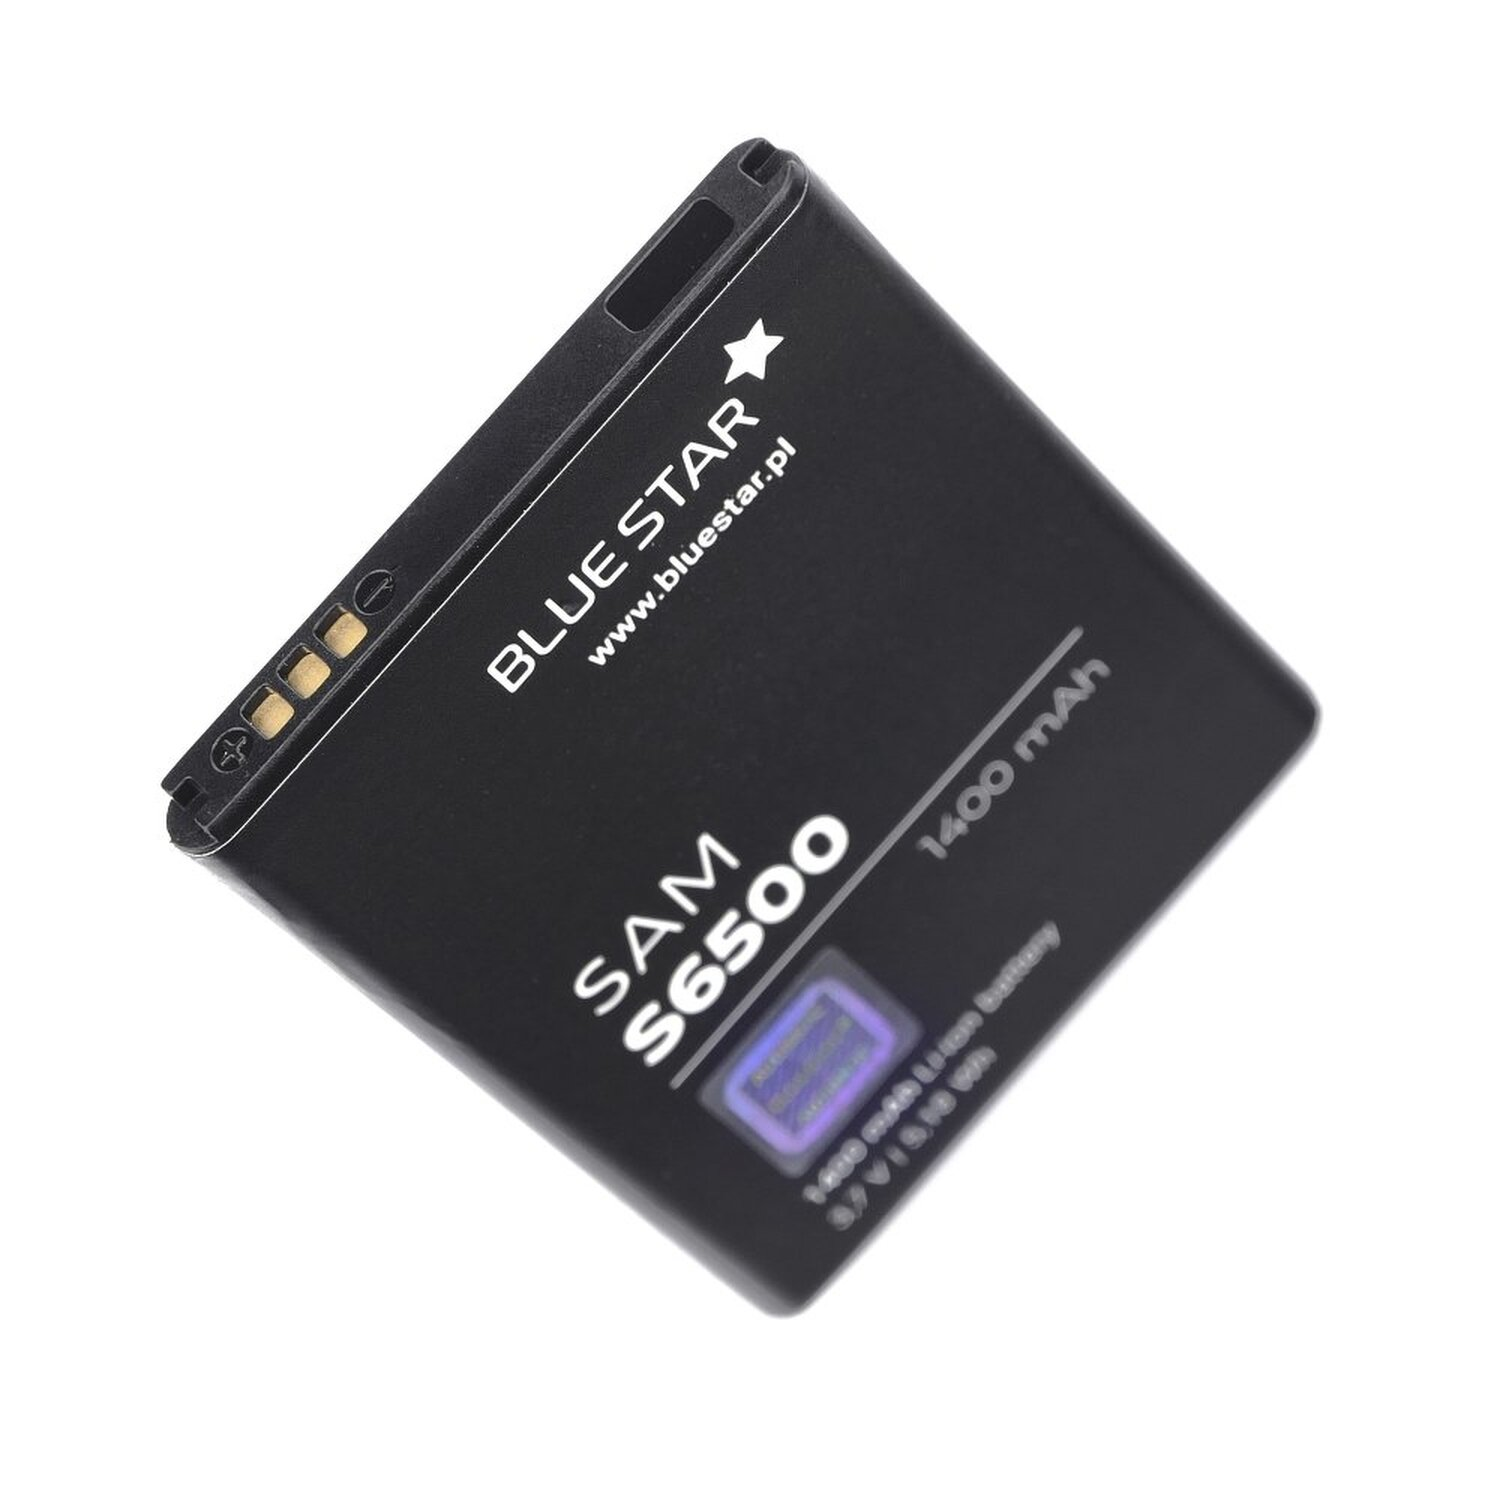 BLUESTAR Akku für Samsung Galaxy (S7500) Li-Ion Handyakku Plus Ace